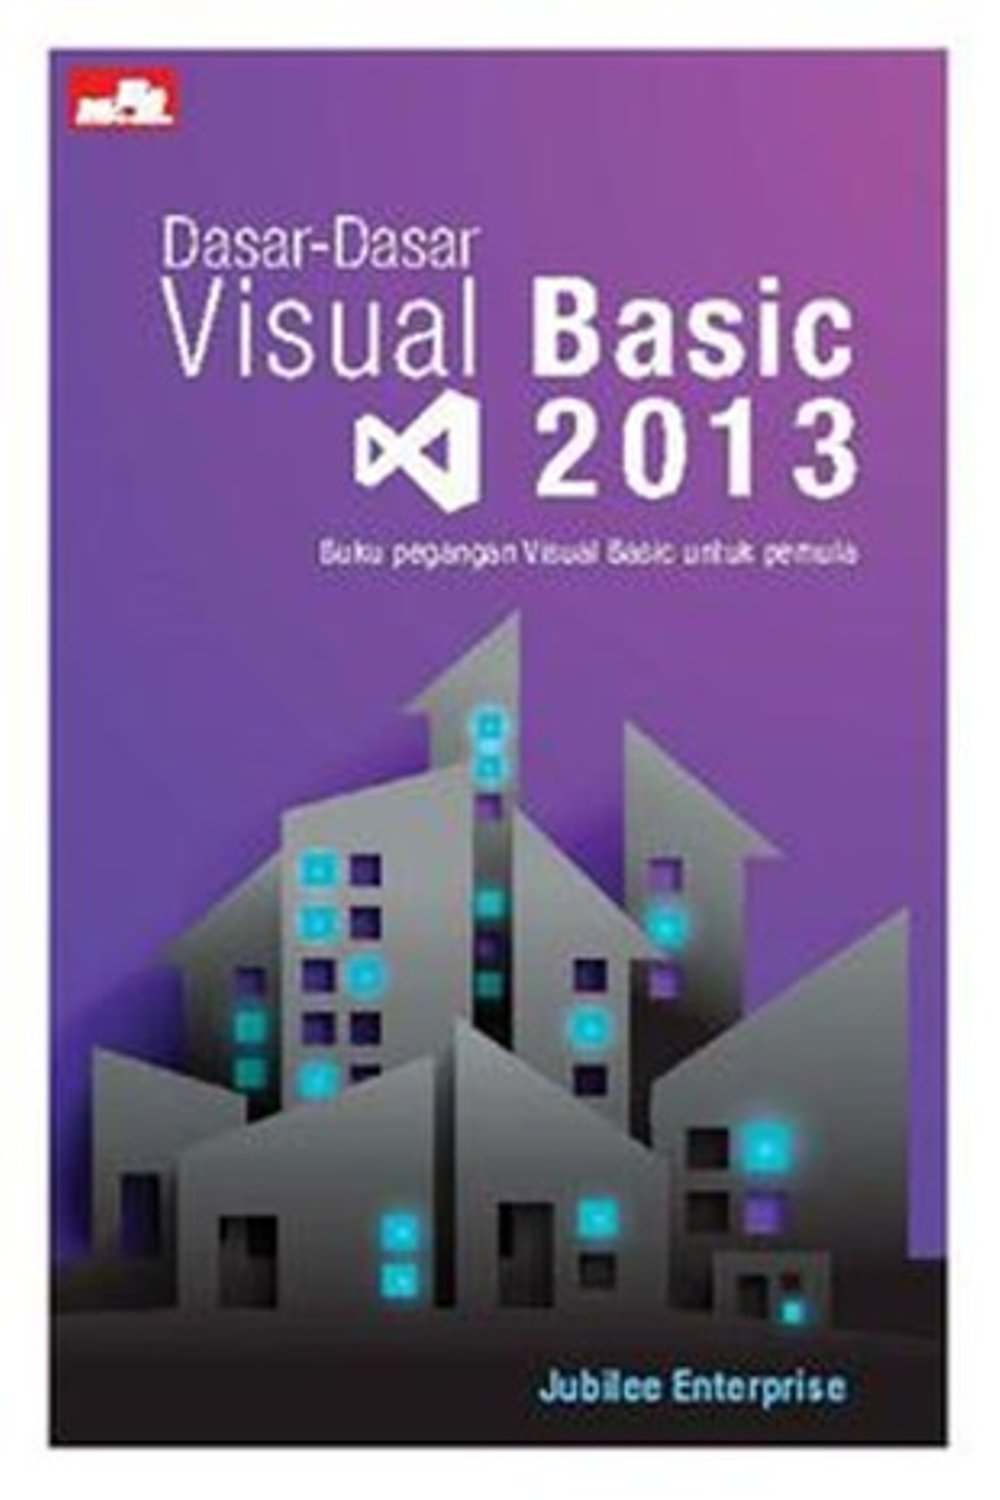 Dasar-dasar Visual Basic 2013